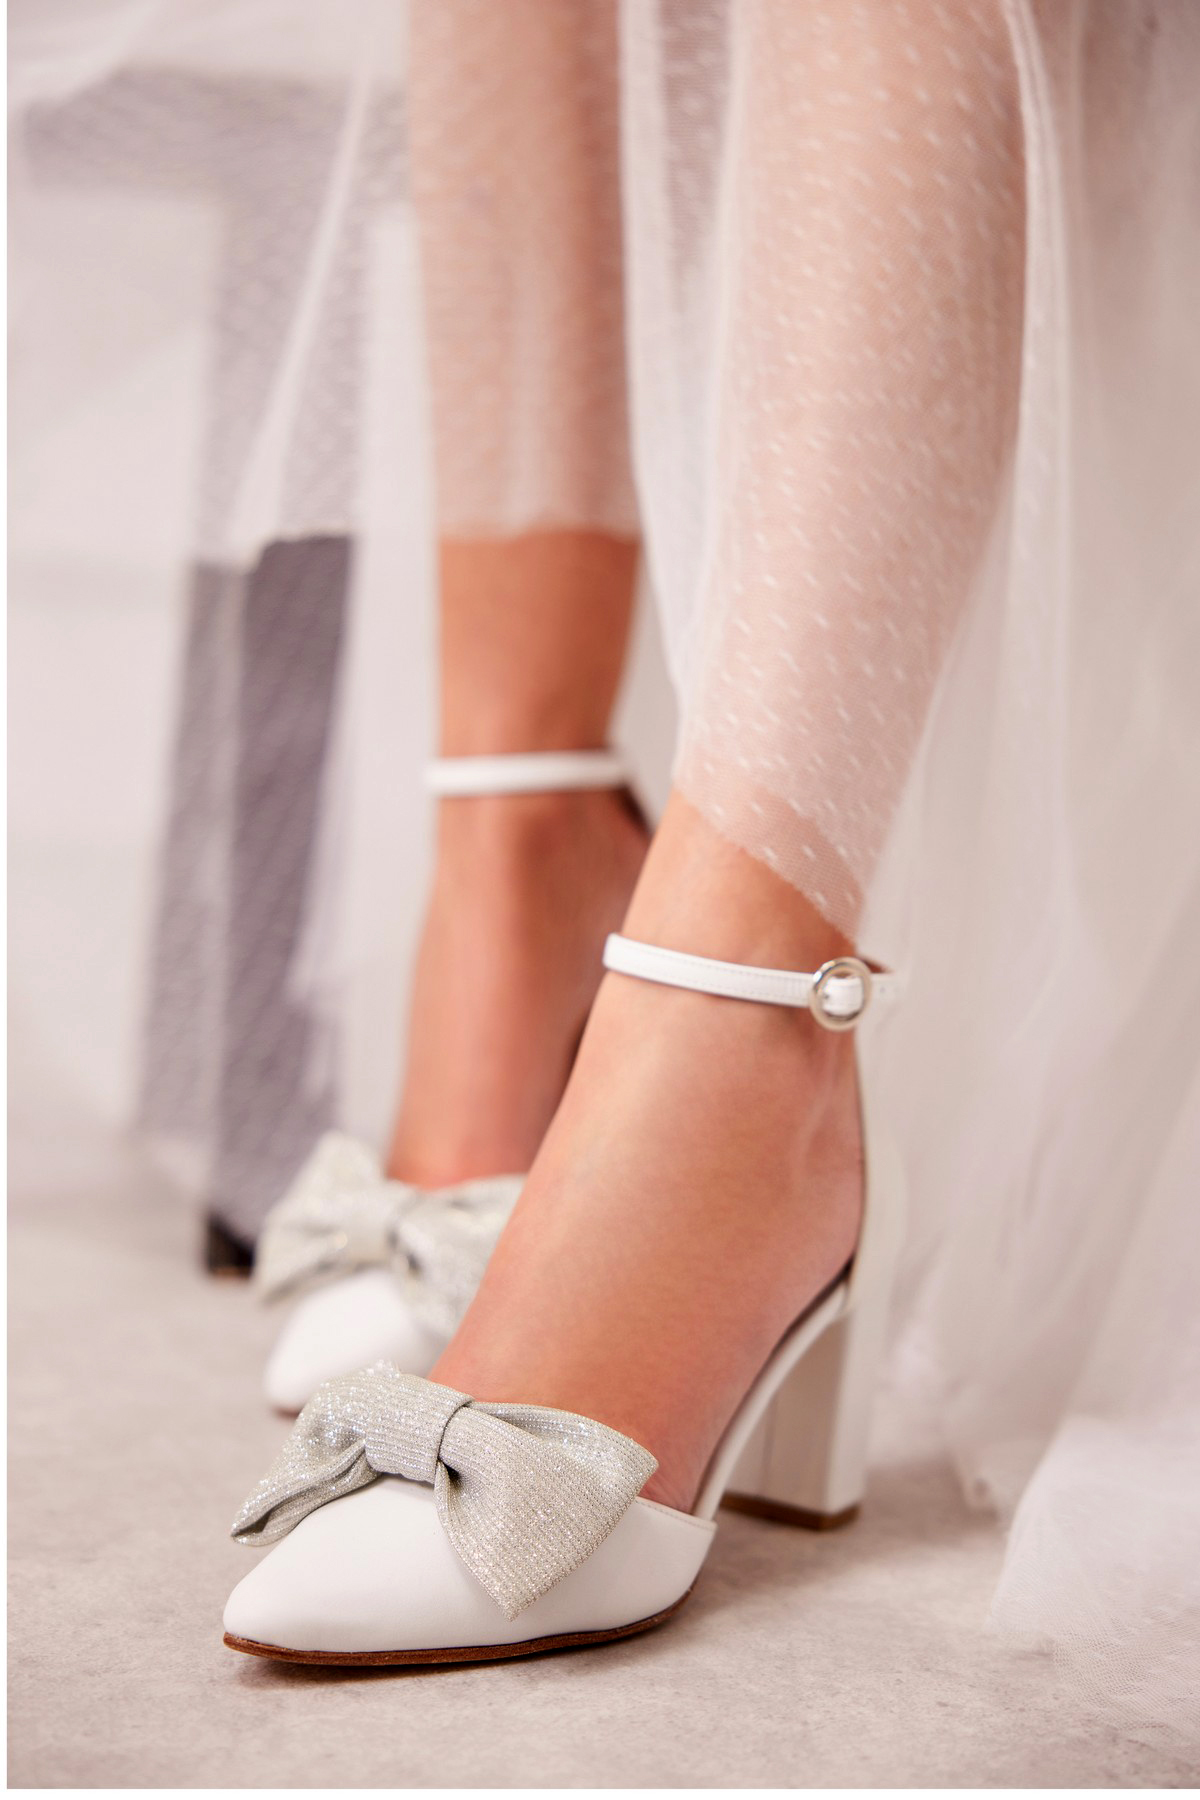 bow wedding shoes closed toe